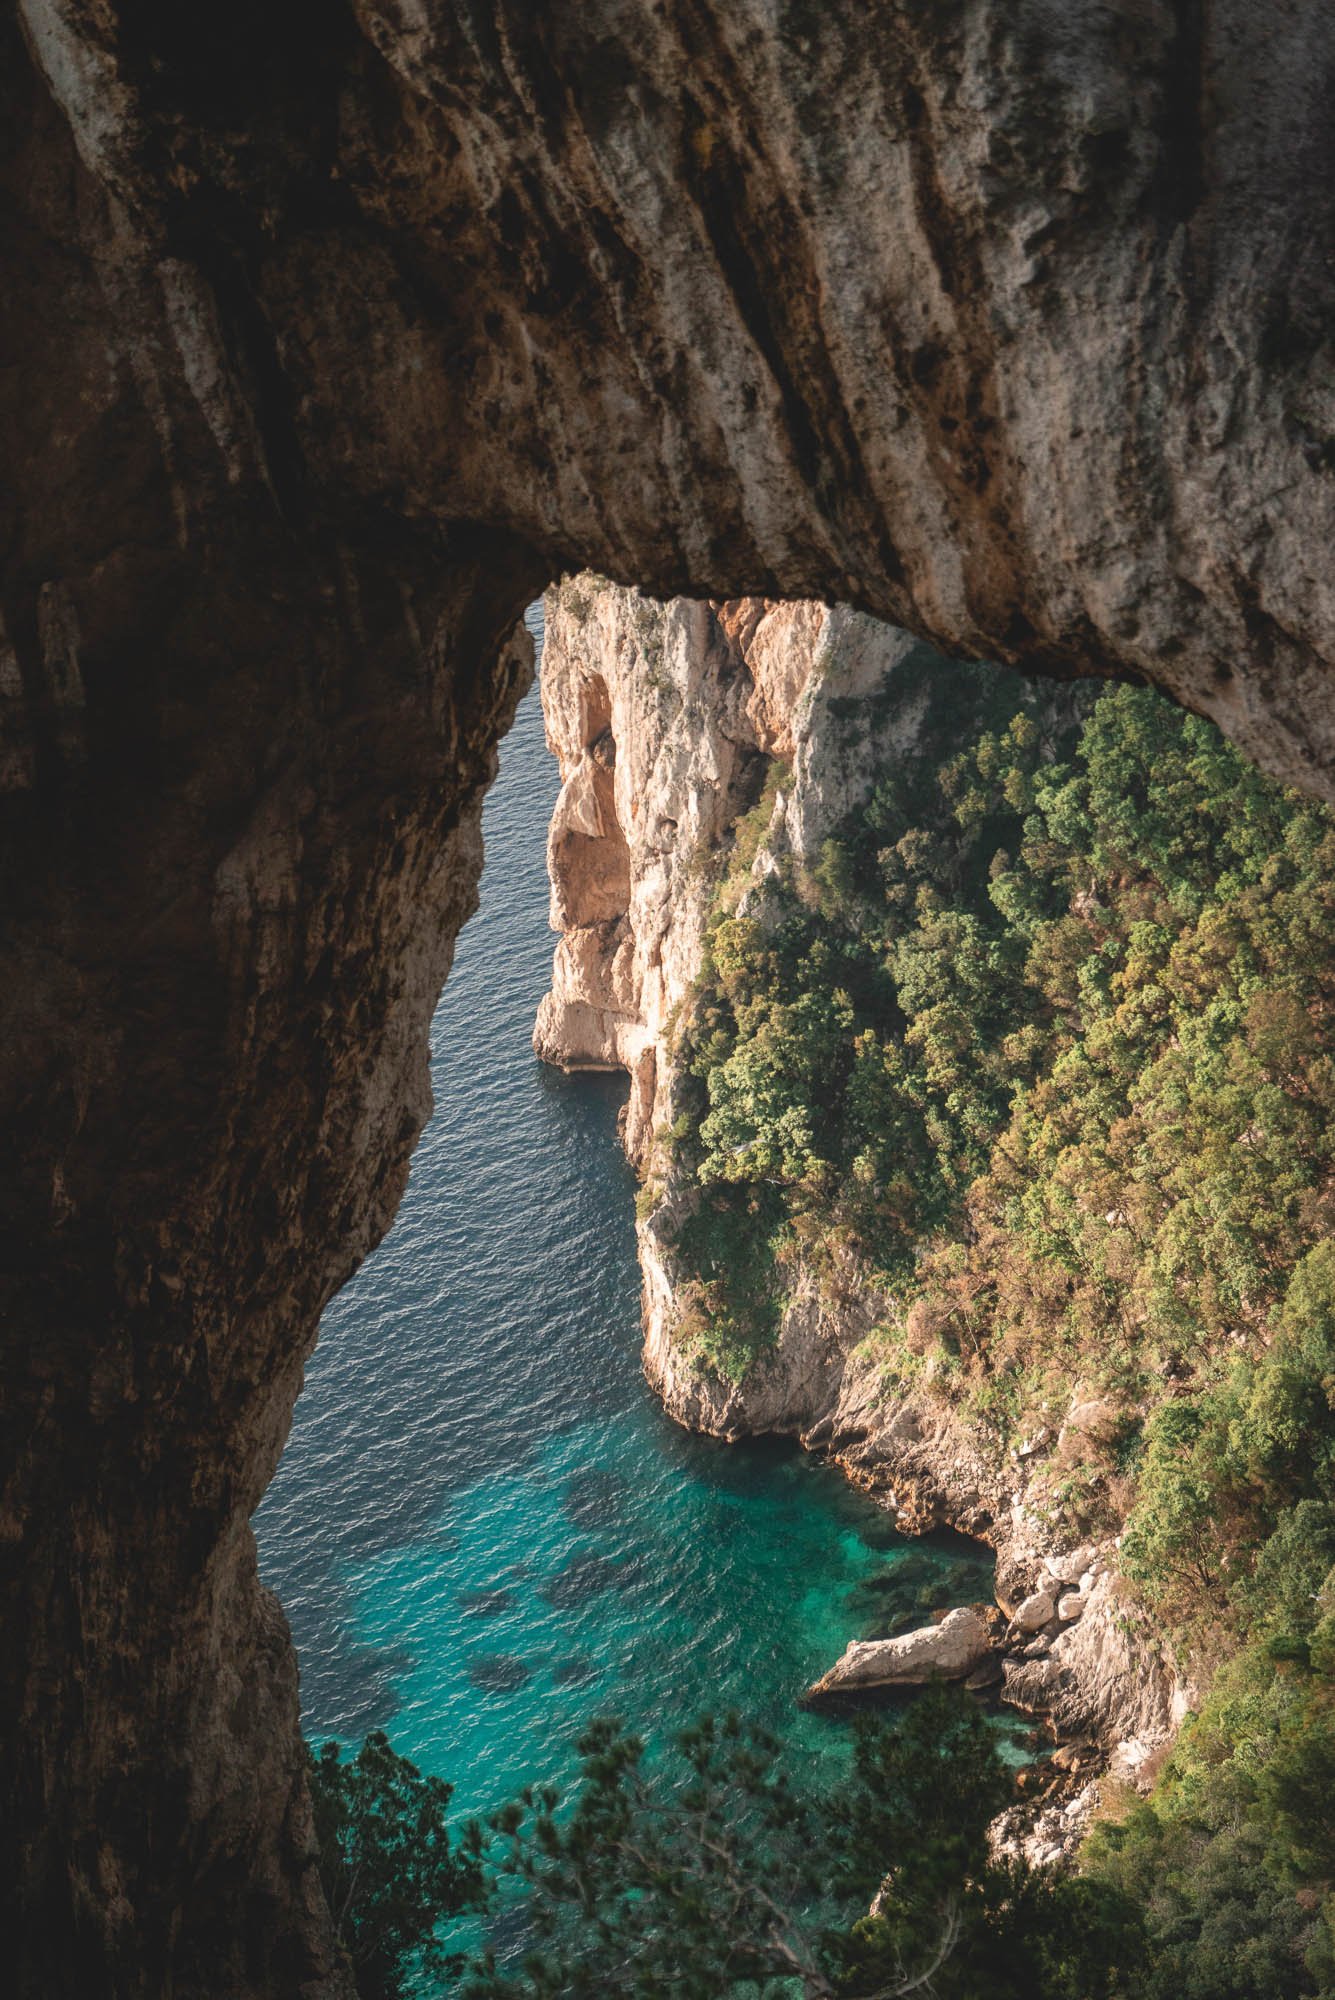 What to do in Positano? Visit the island of Capri